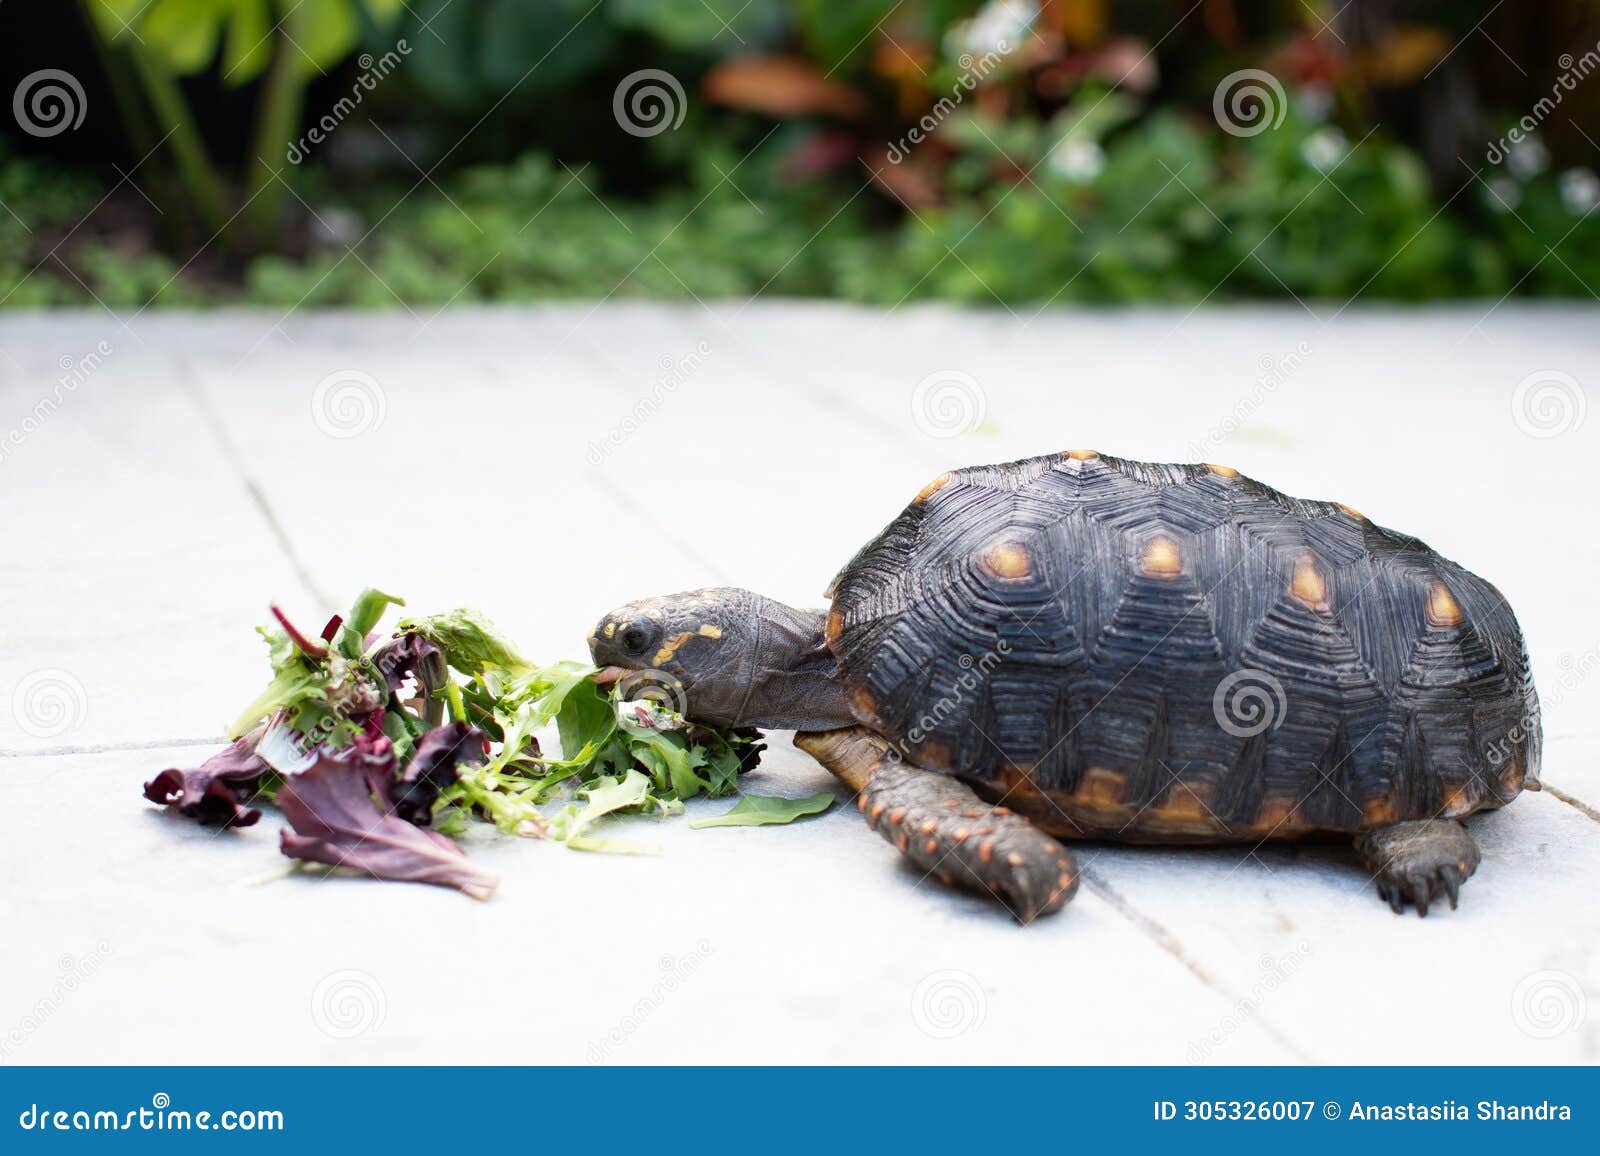 juvenile red footed tortoise eating greens. chelonoidis carbonarius